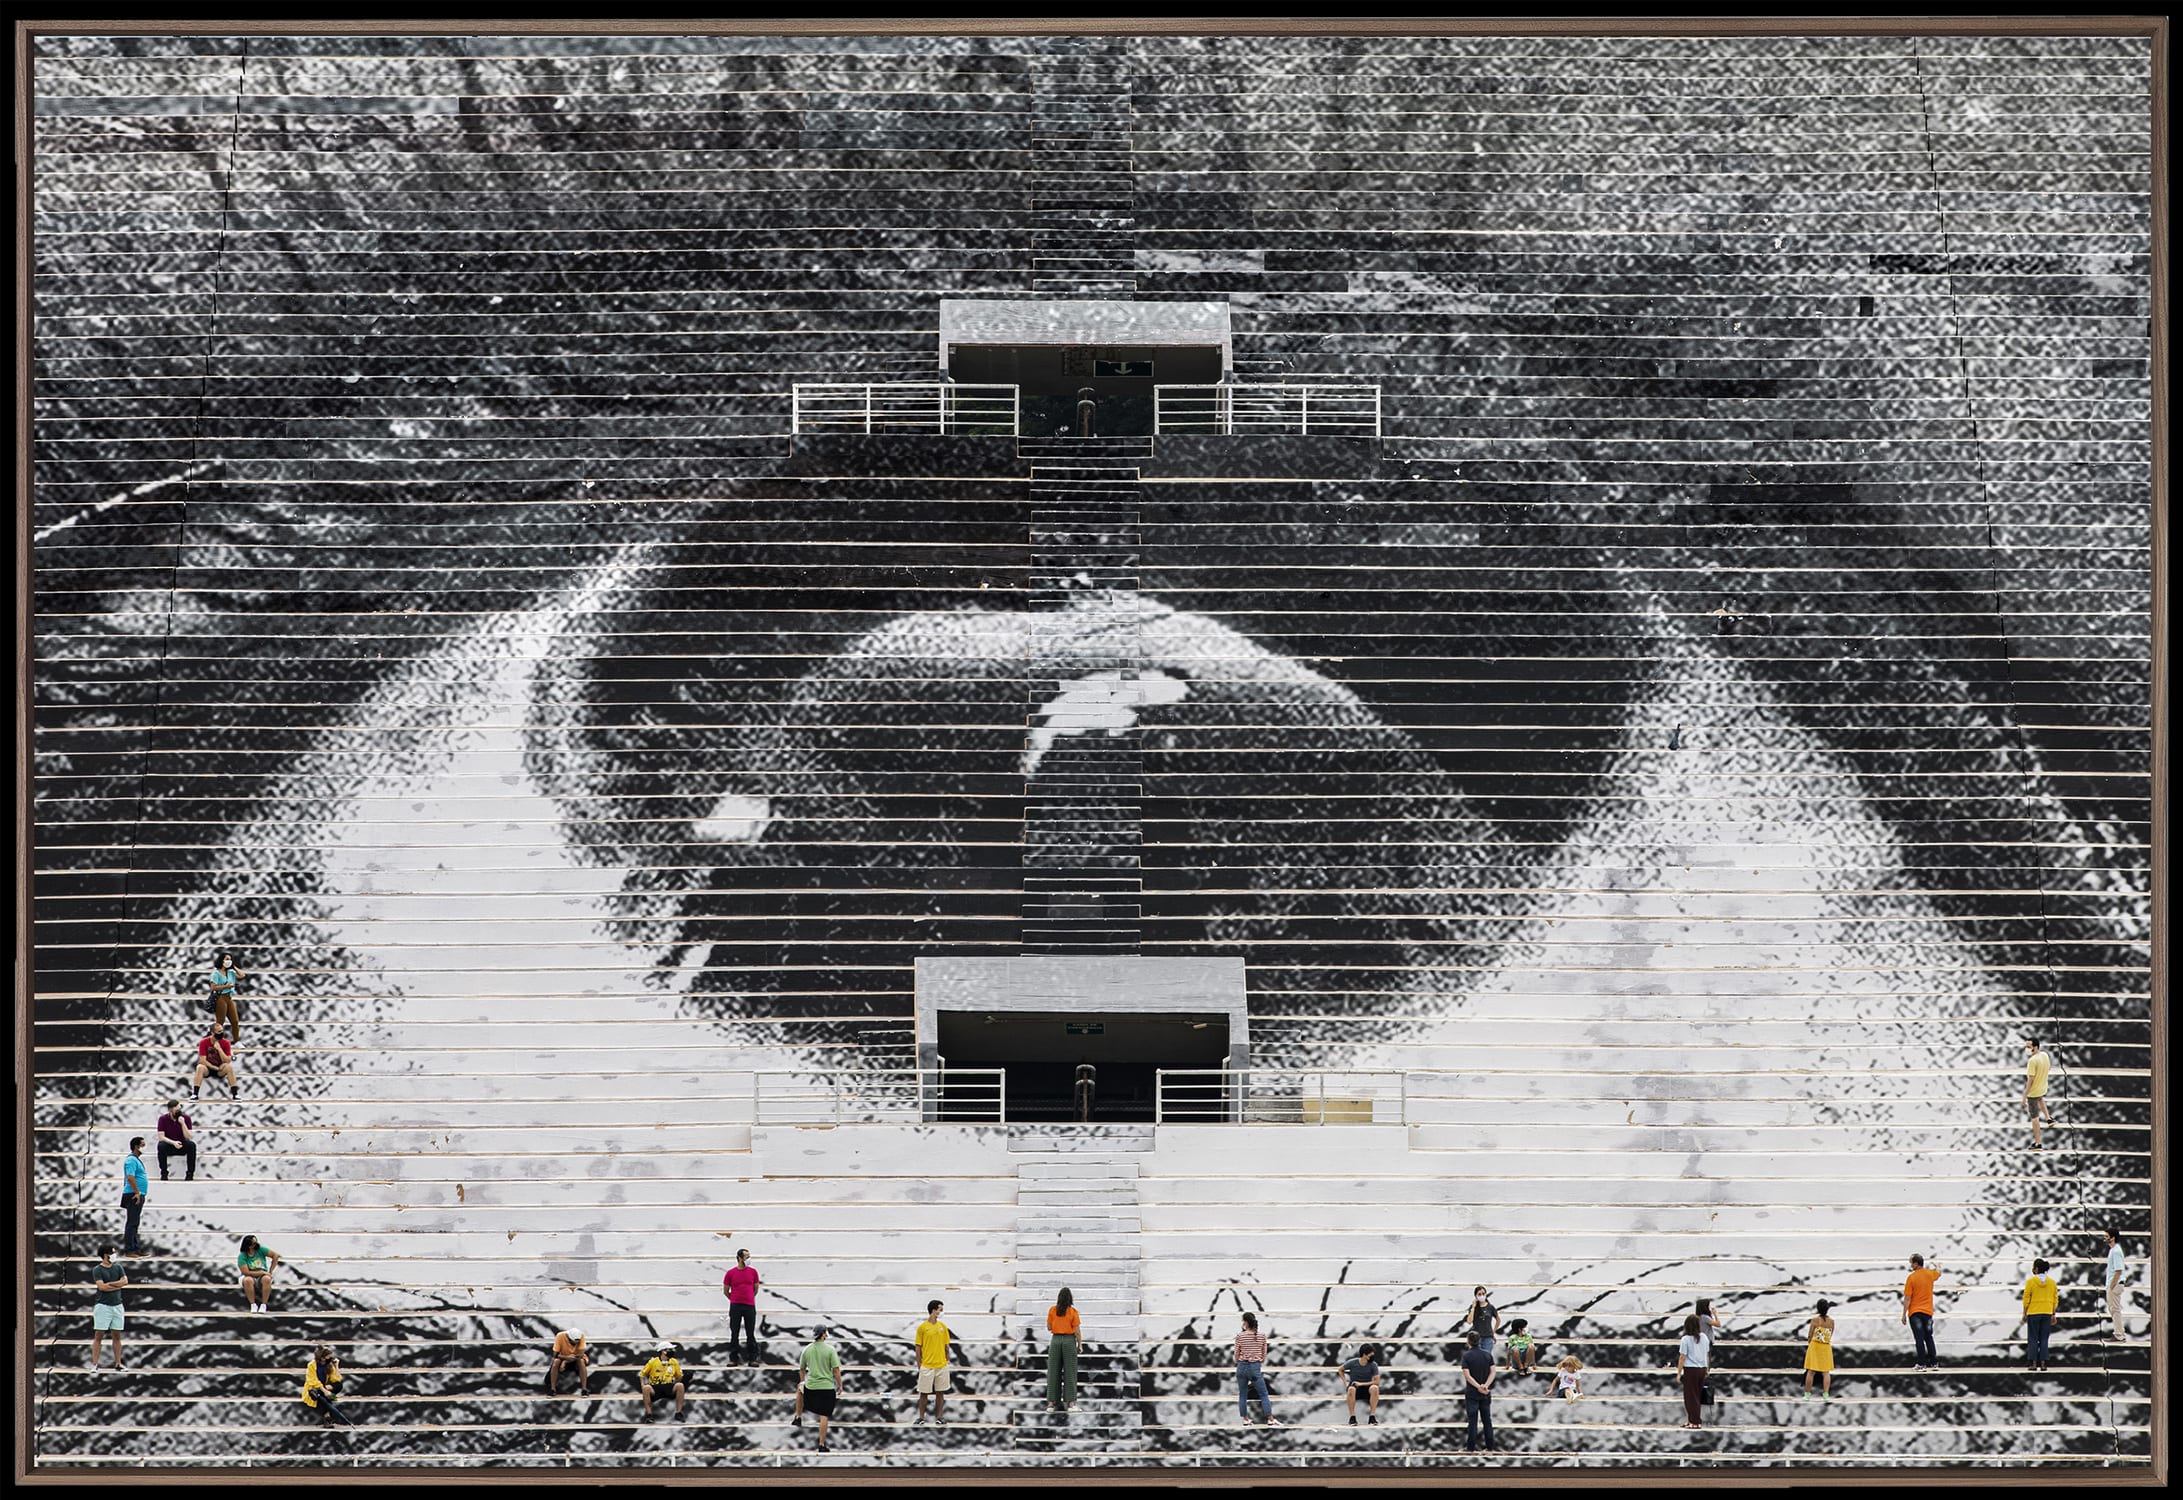 JR, Eye #4, Estadio de Pacaembu, Sao Paulo, 2020, 2020. Courtesy of the artist and Galleria Continua, San Gimignano, Beijing, Boissy-le-Châtel, Havana, Paris, Rome, and São Paulo.